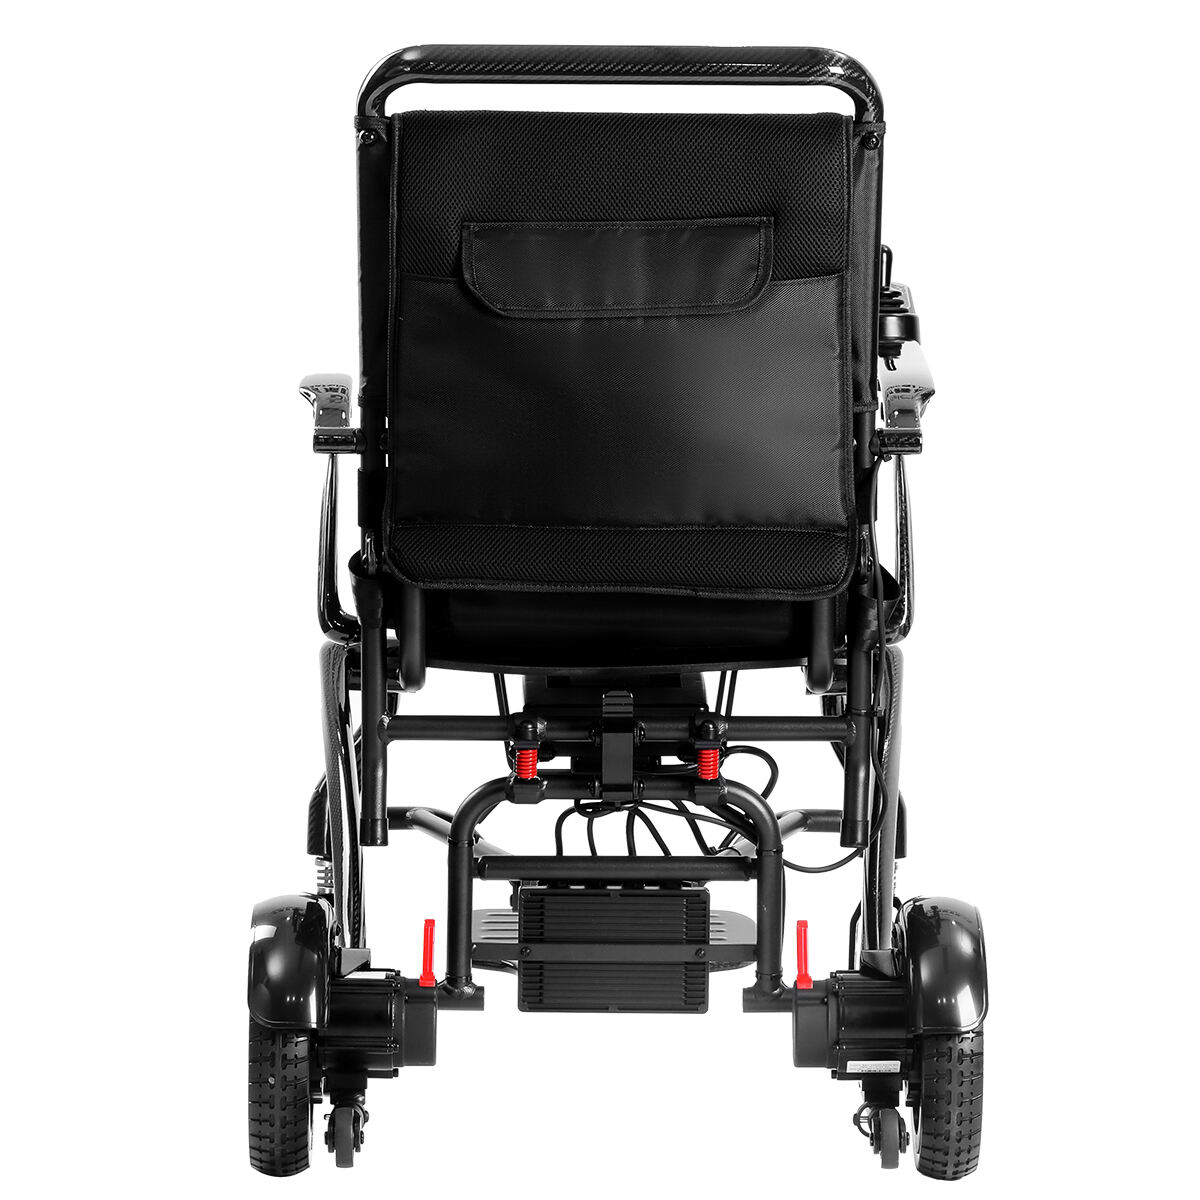 BC-EC8002 Luxury Lightweight Lithium Battery Carbon Fiber Electric Wheelchair